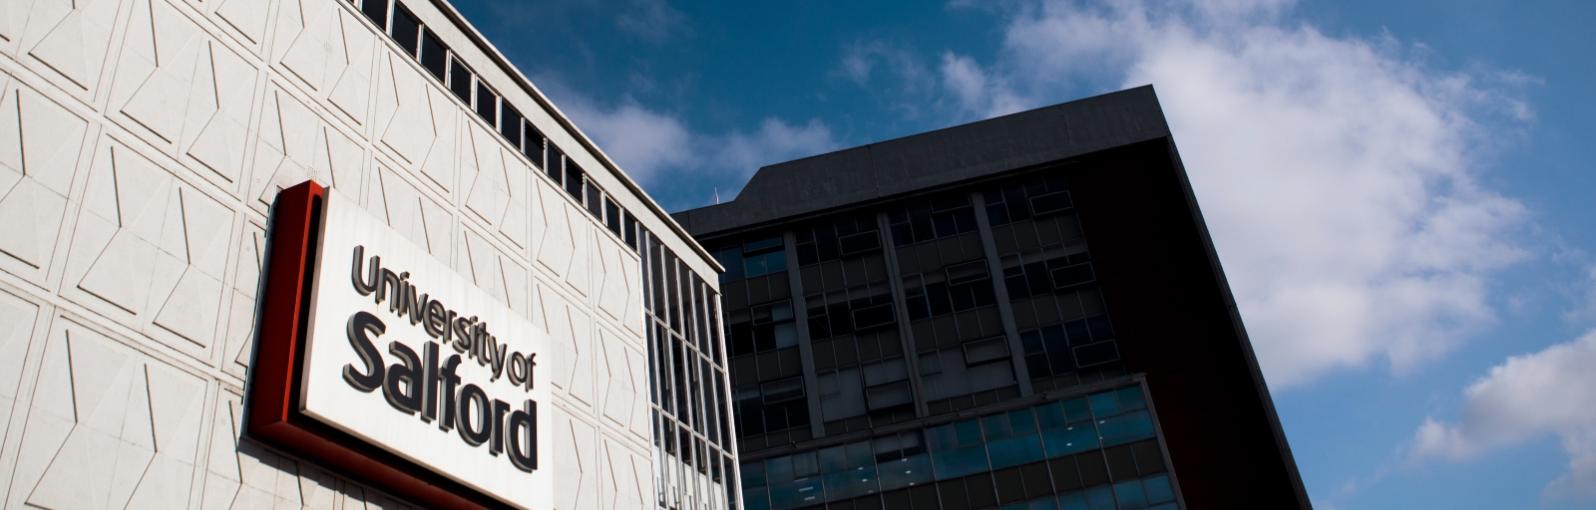 Maxwell Building exterior, University of Salford